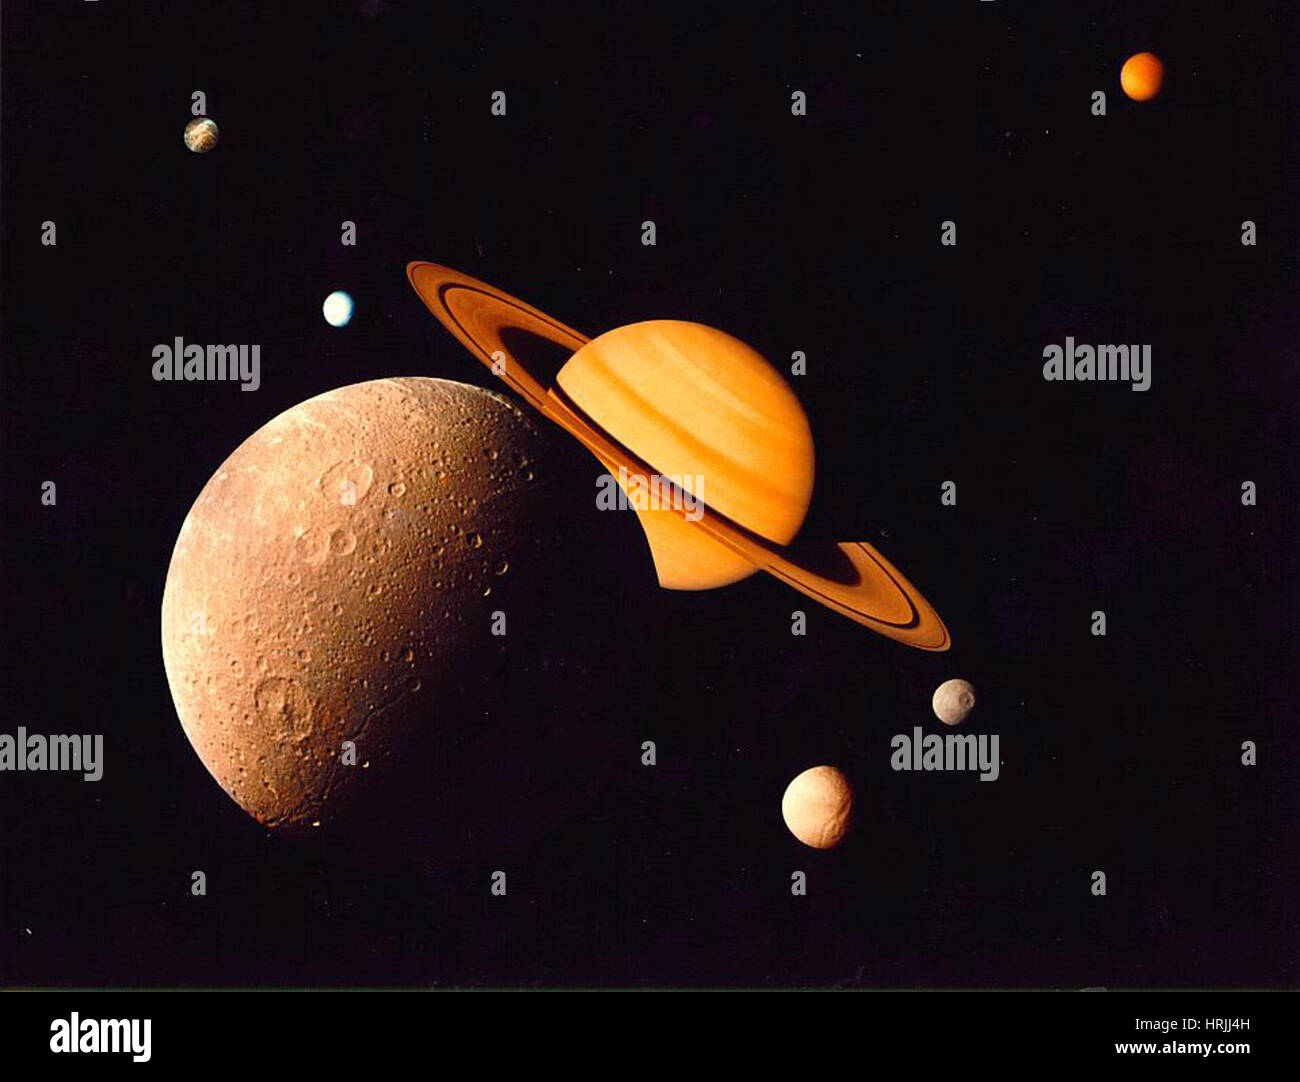 Saturnian fotografías e imágenes de alta resolución - Alamy